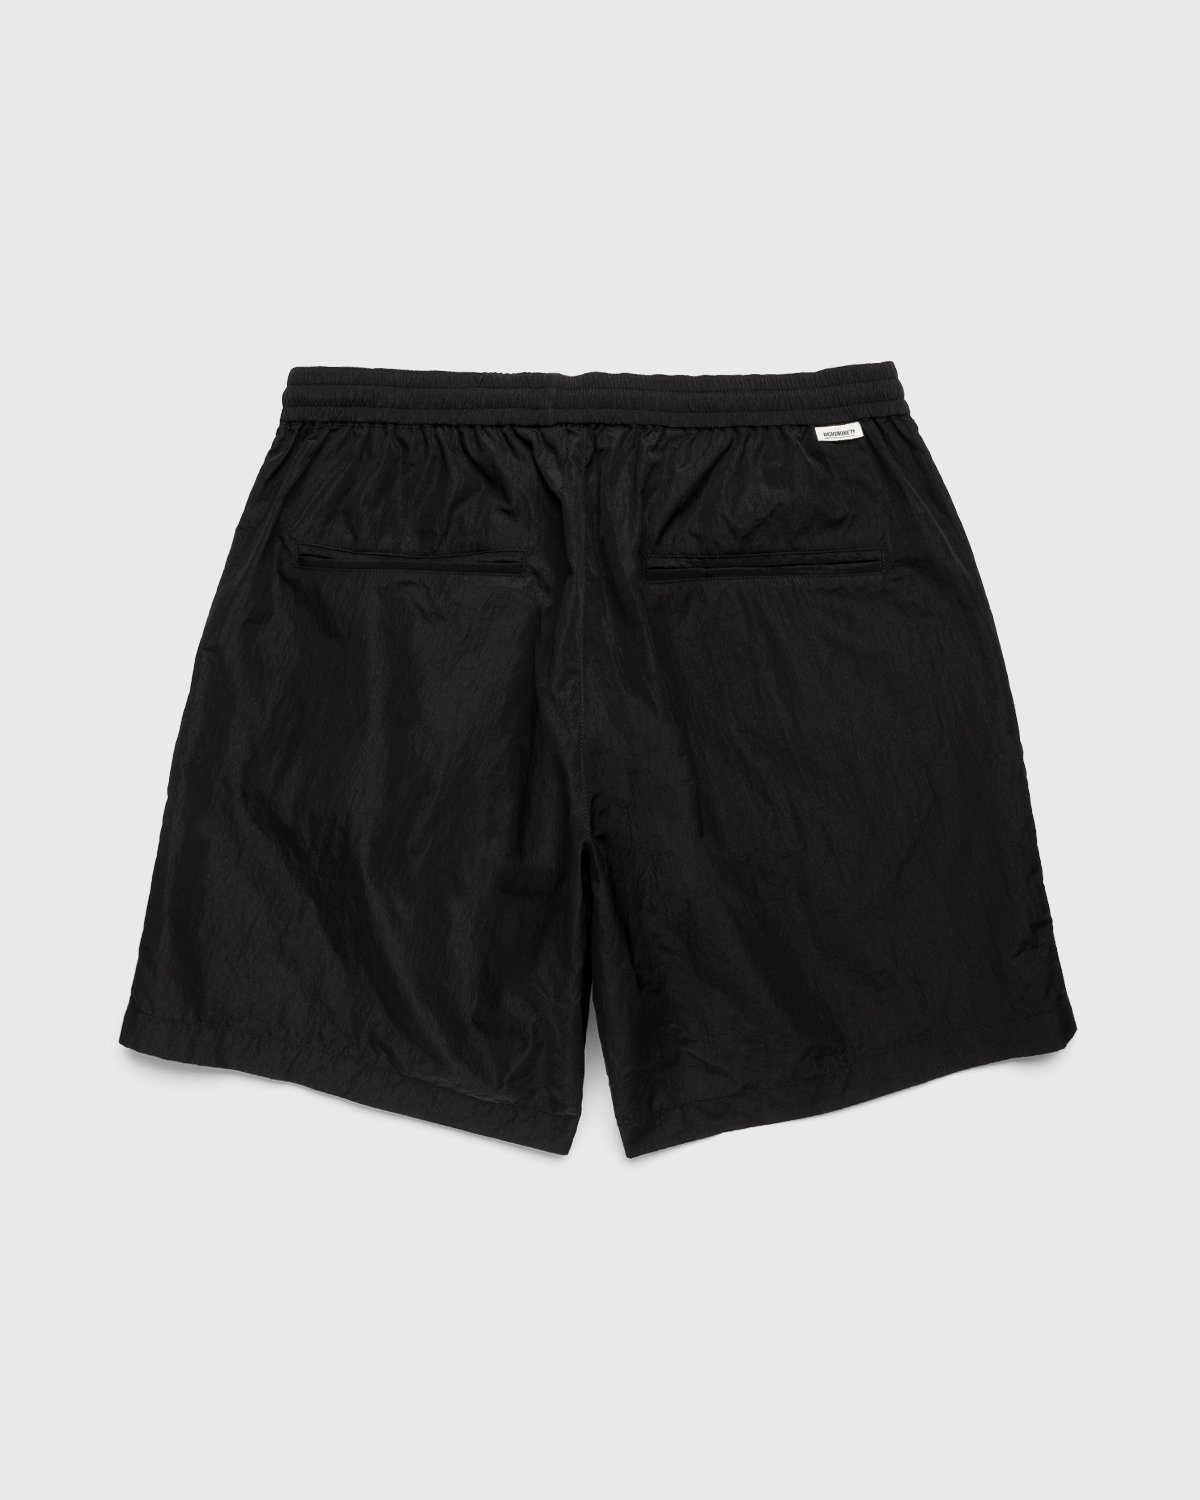 Highsnobiety – Crepe Nylon Shorts Black - Shorts - Black - Image 2